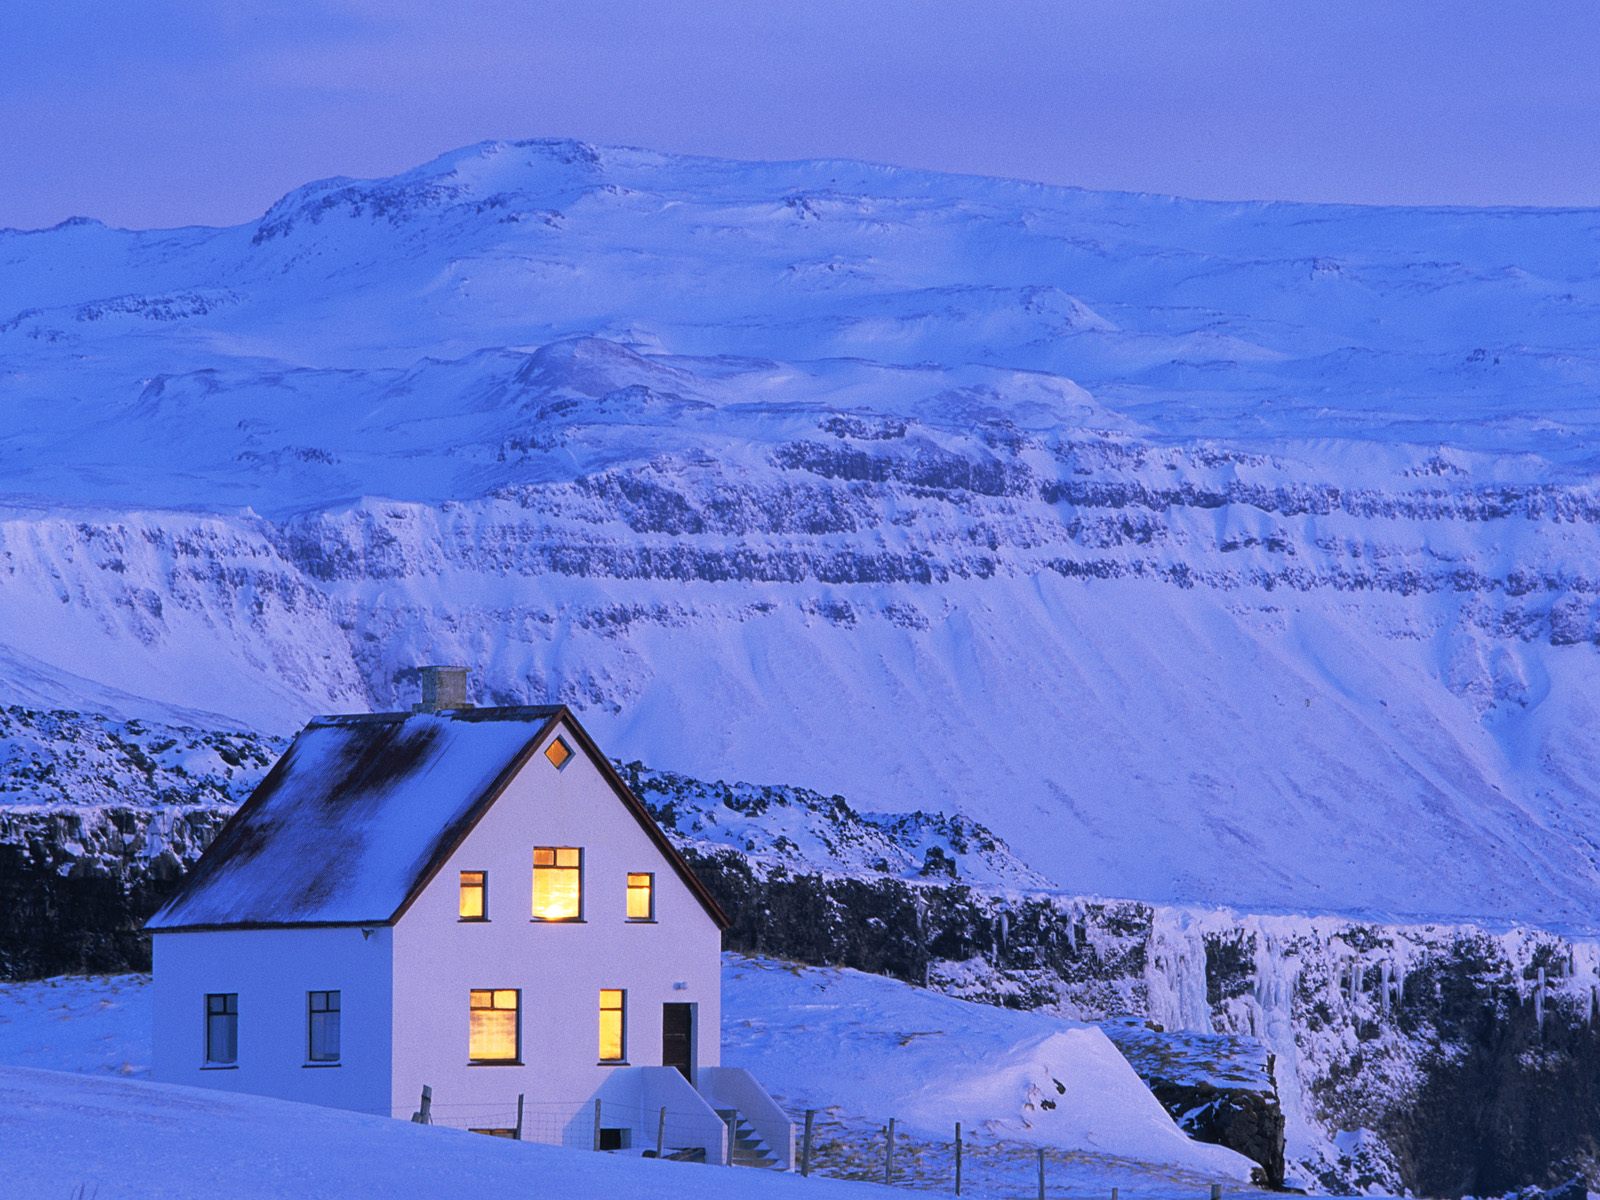 Cozy Mountain Home - Winter Wallpaper (509530) - Fanpop